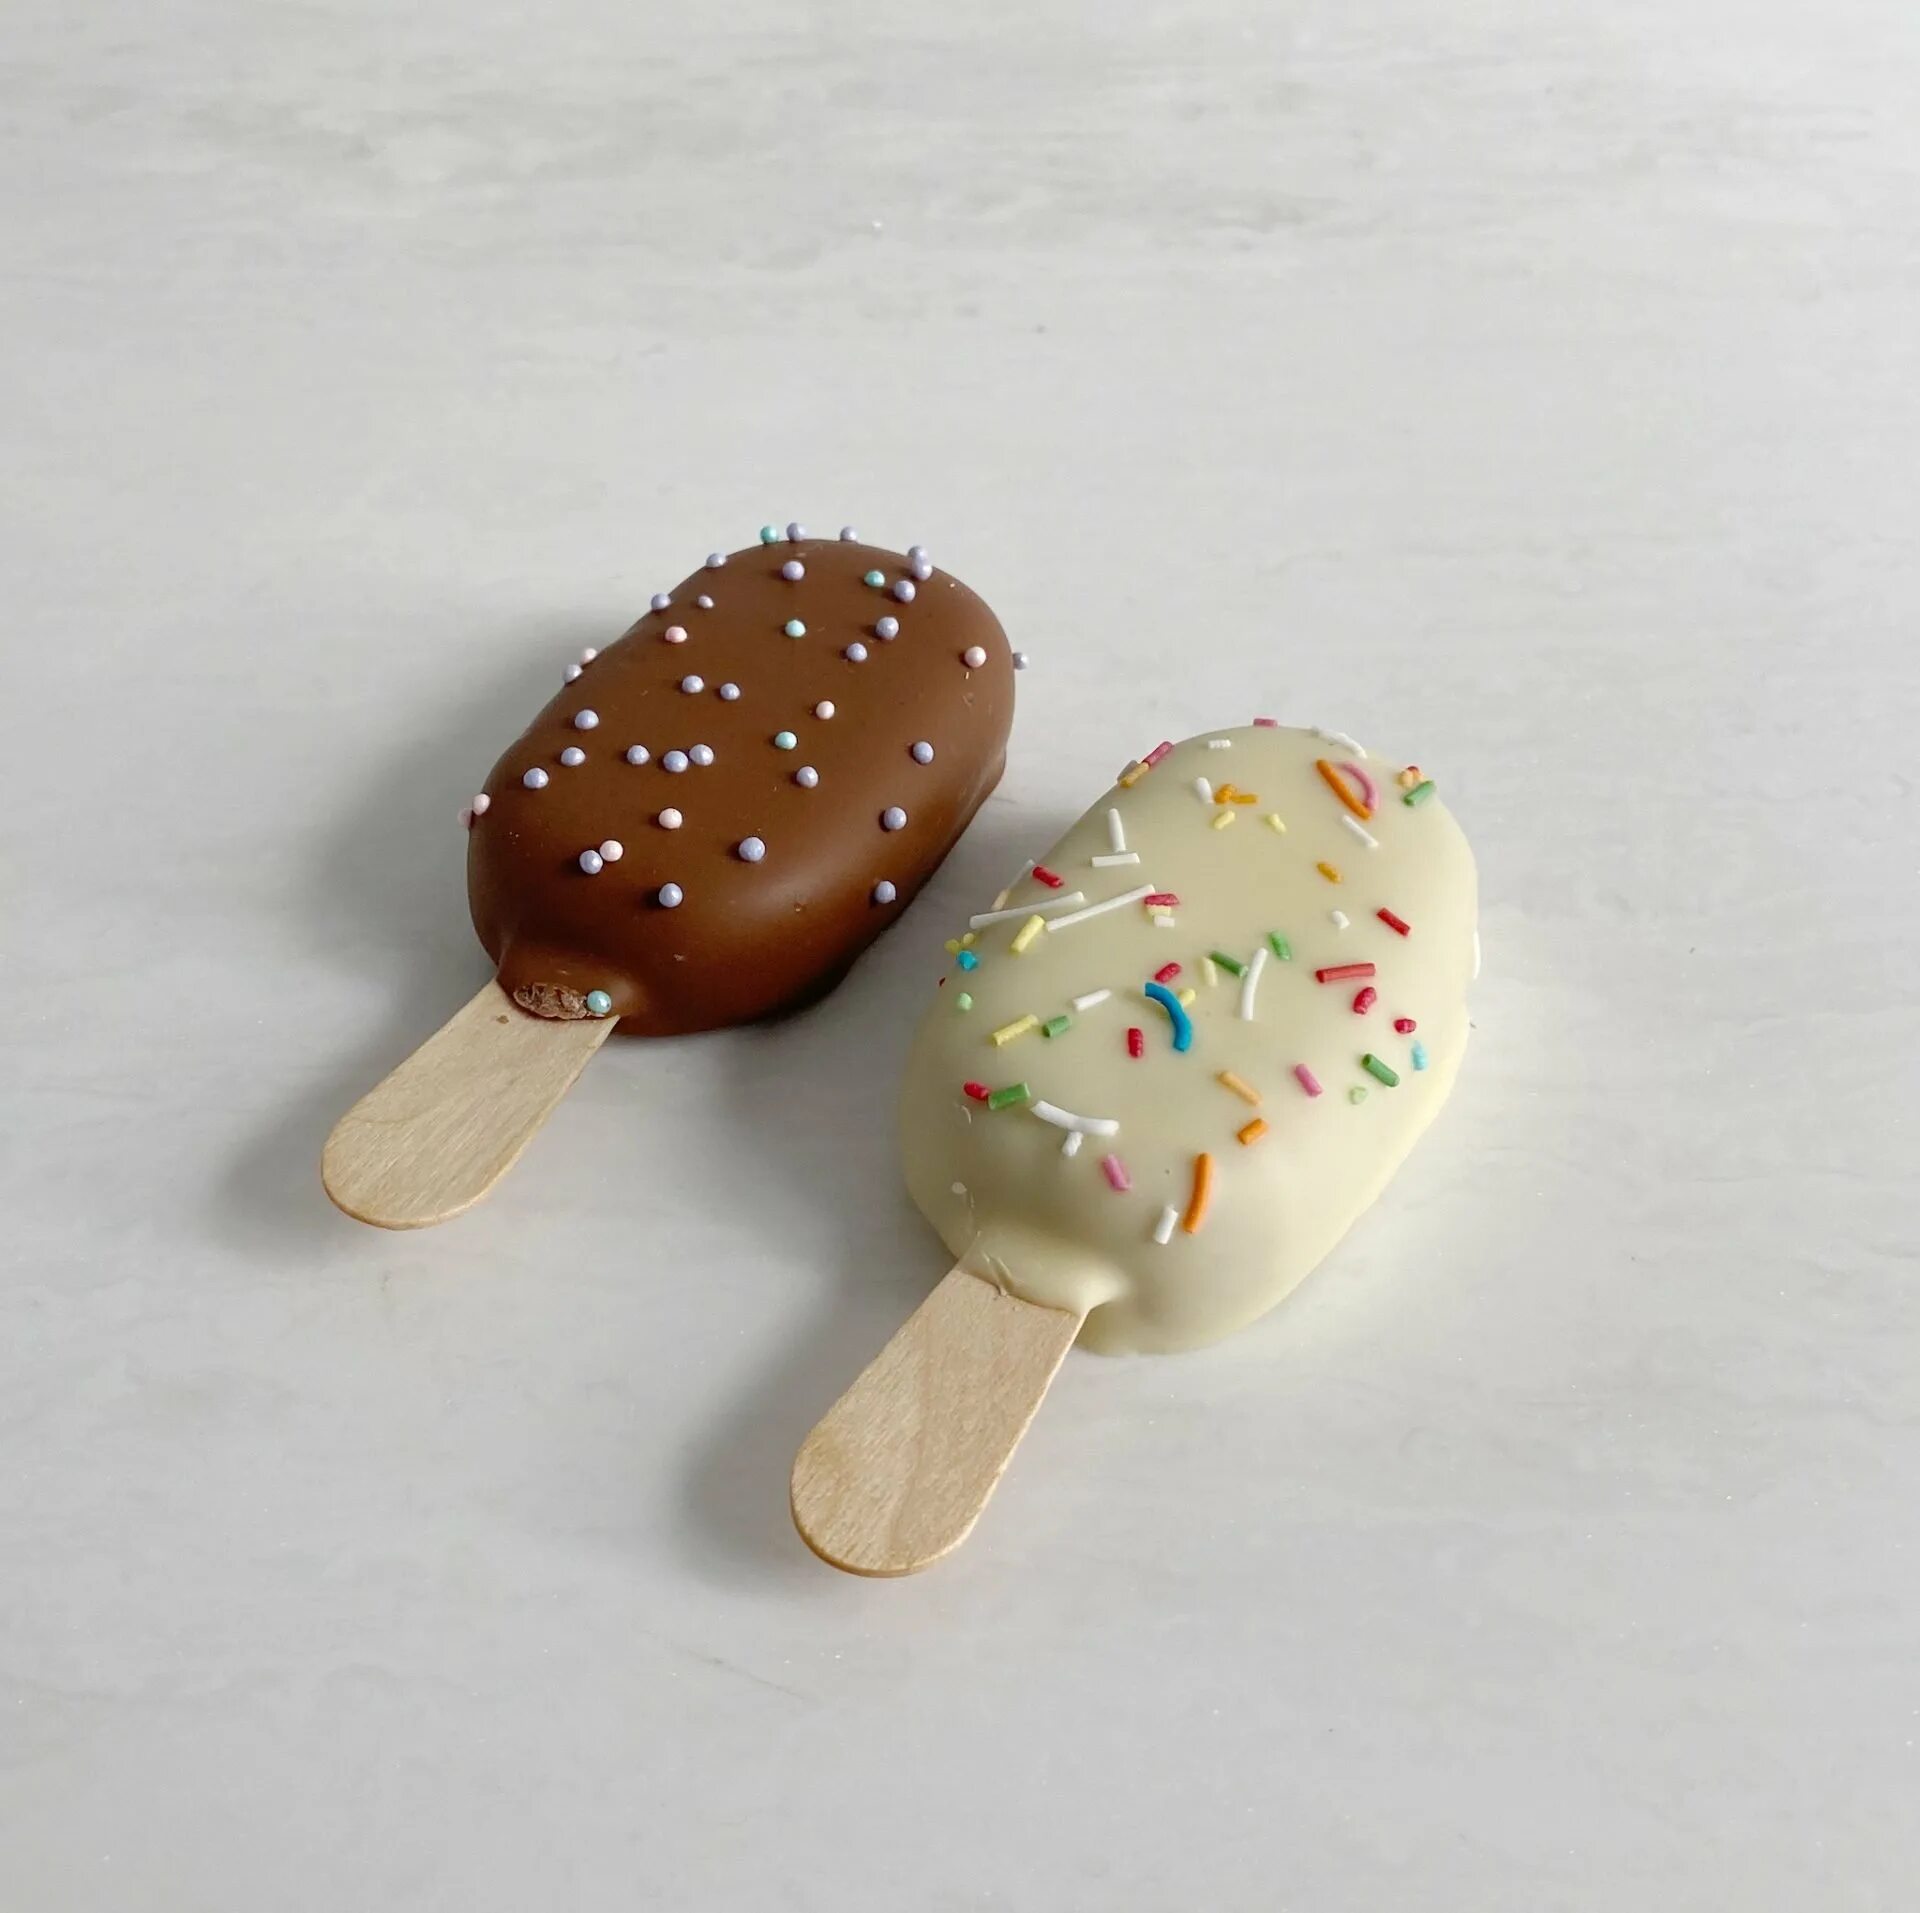 Домашнее эскимо на палочке. Кейк попсы эскимо. Пирожное мороженое эскимо. Мороженое на палочке. Пирожные эскимо на палочке.